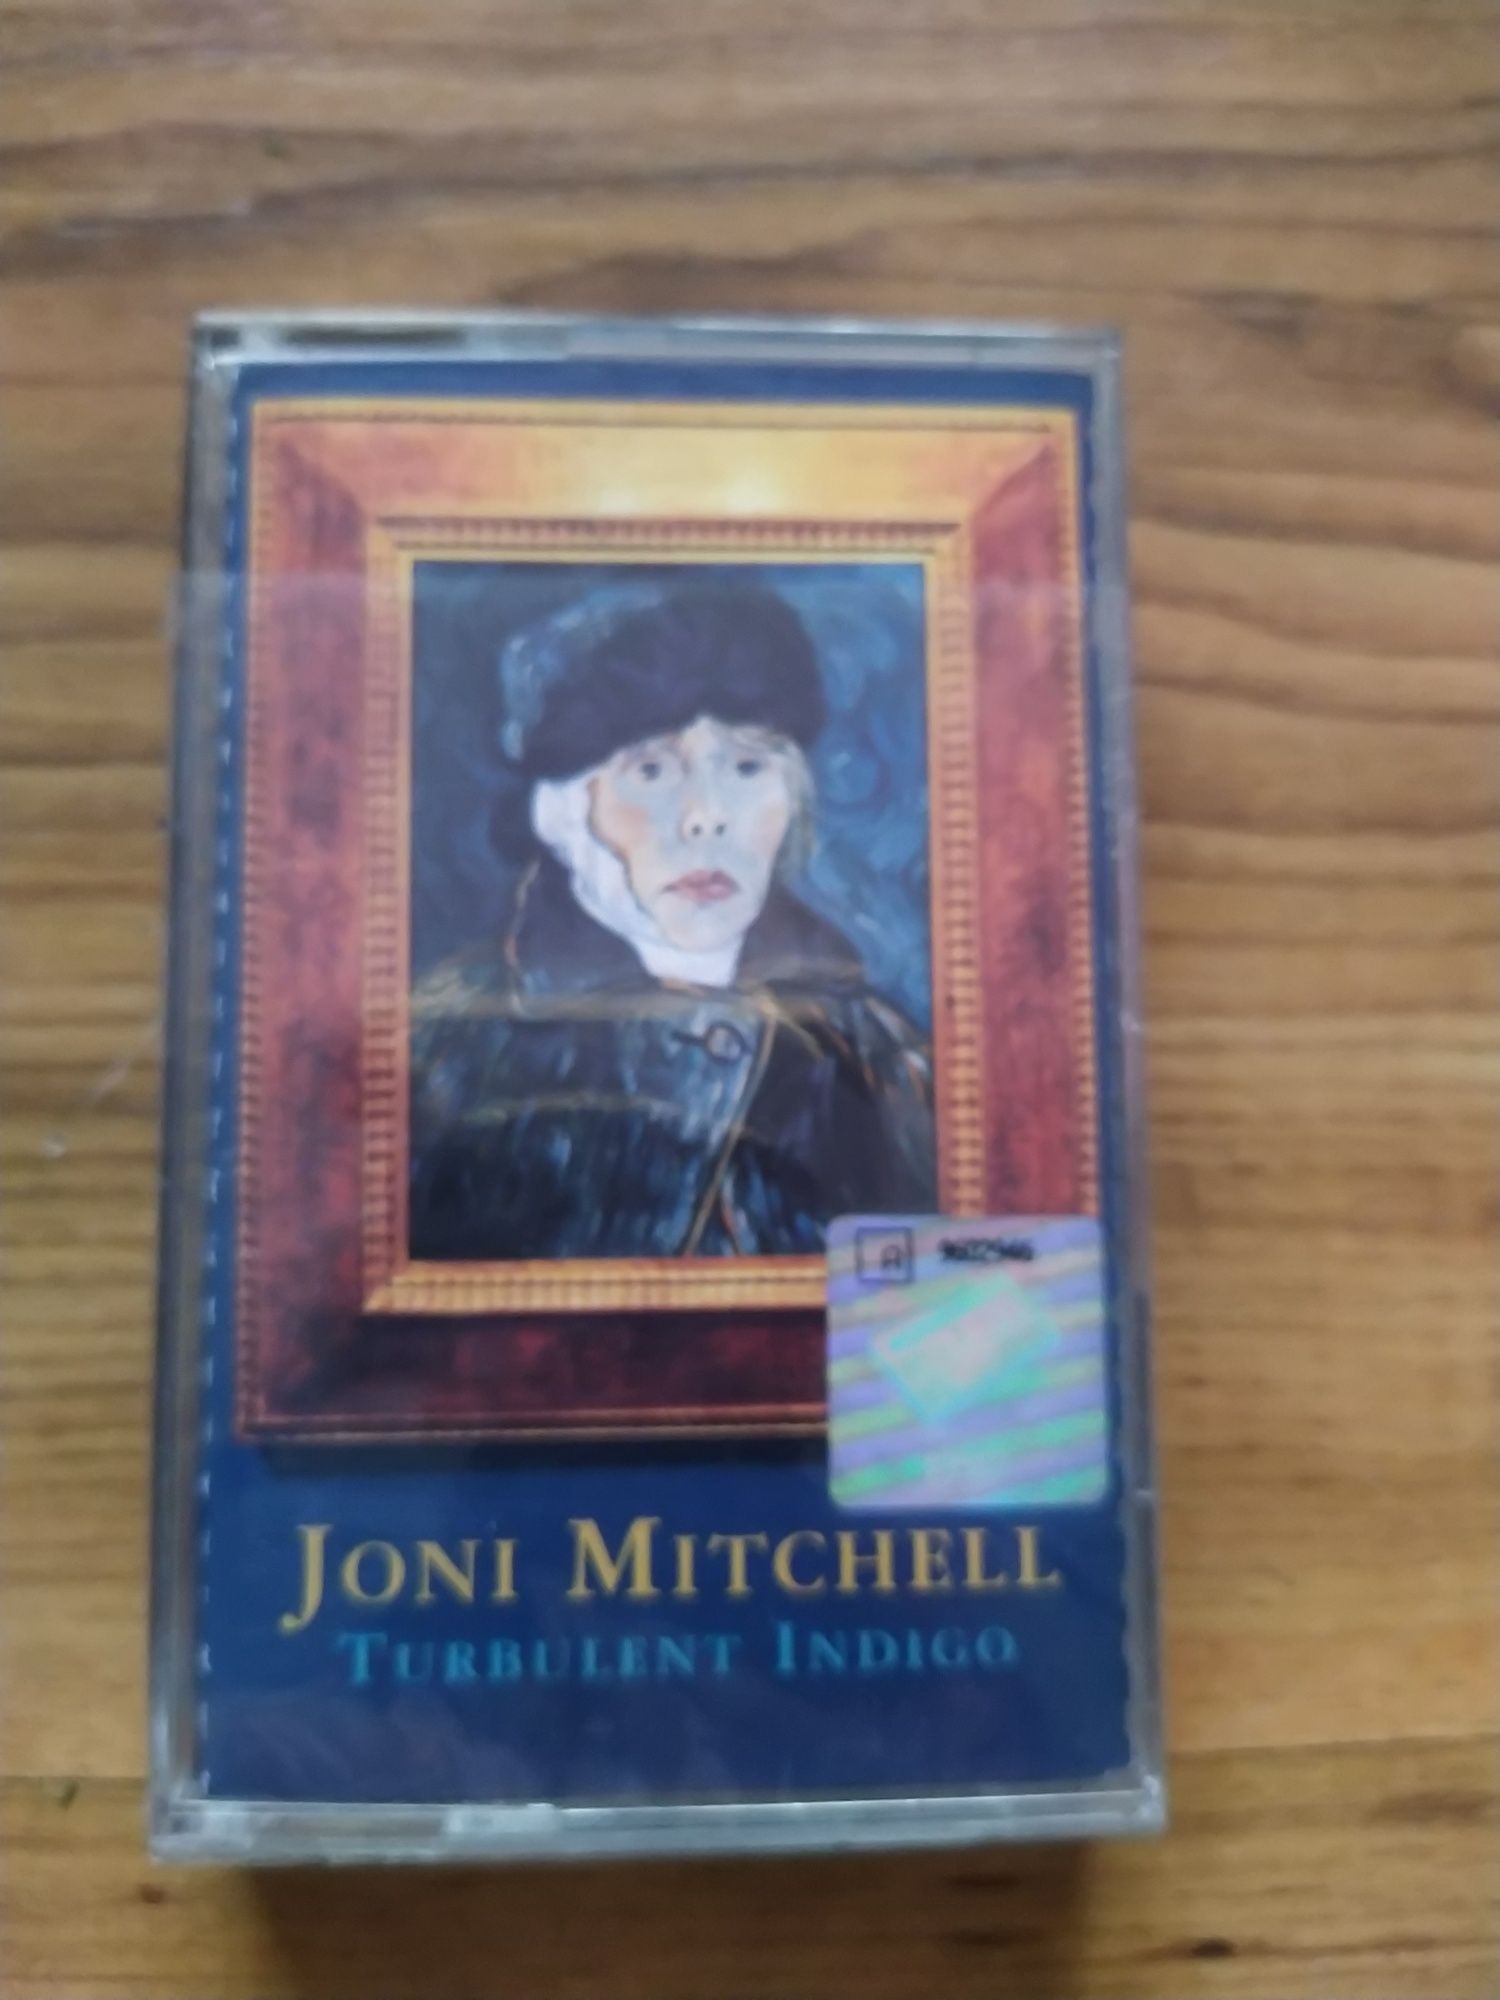 Joni Mitchell-Tribulent indigo